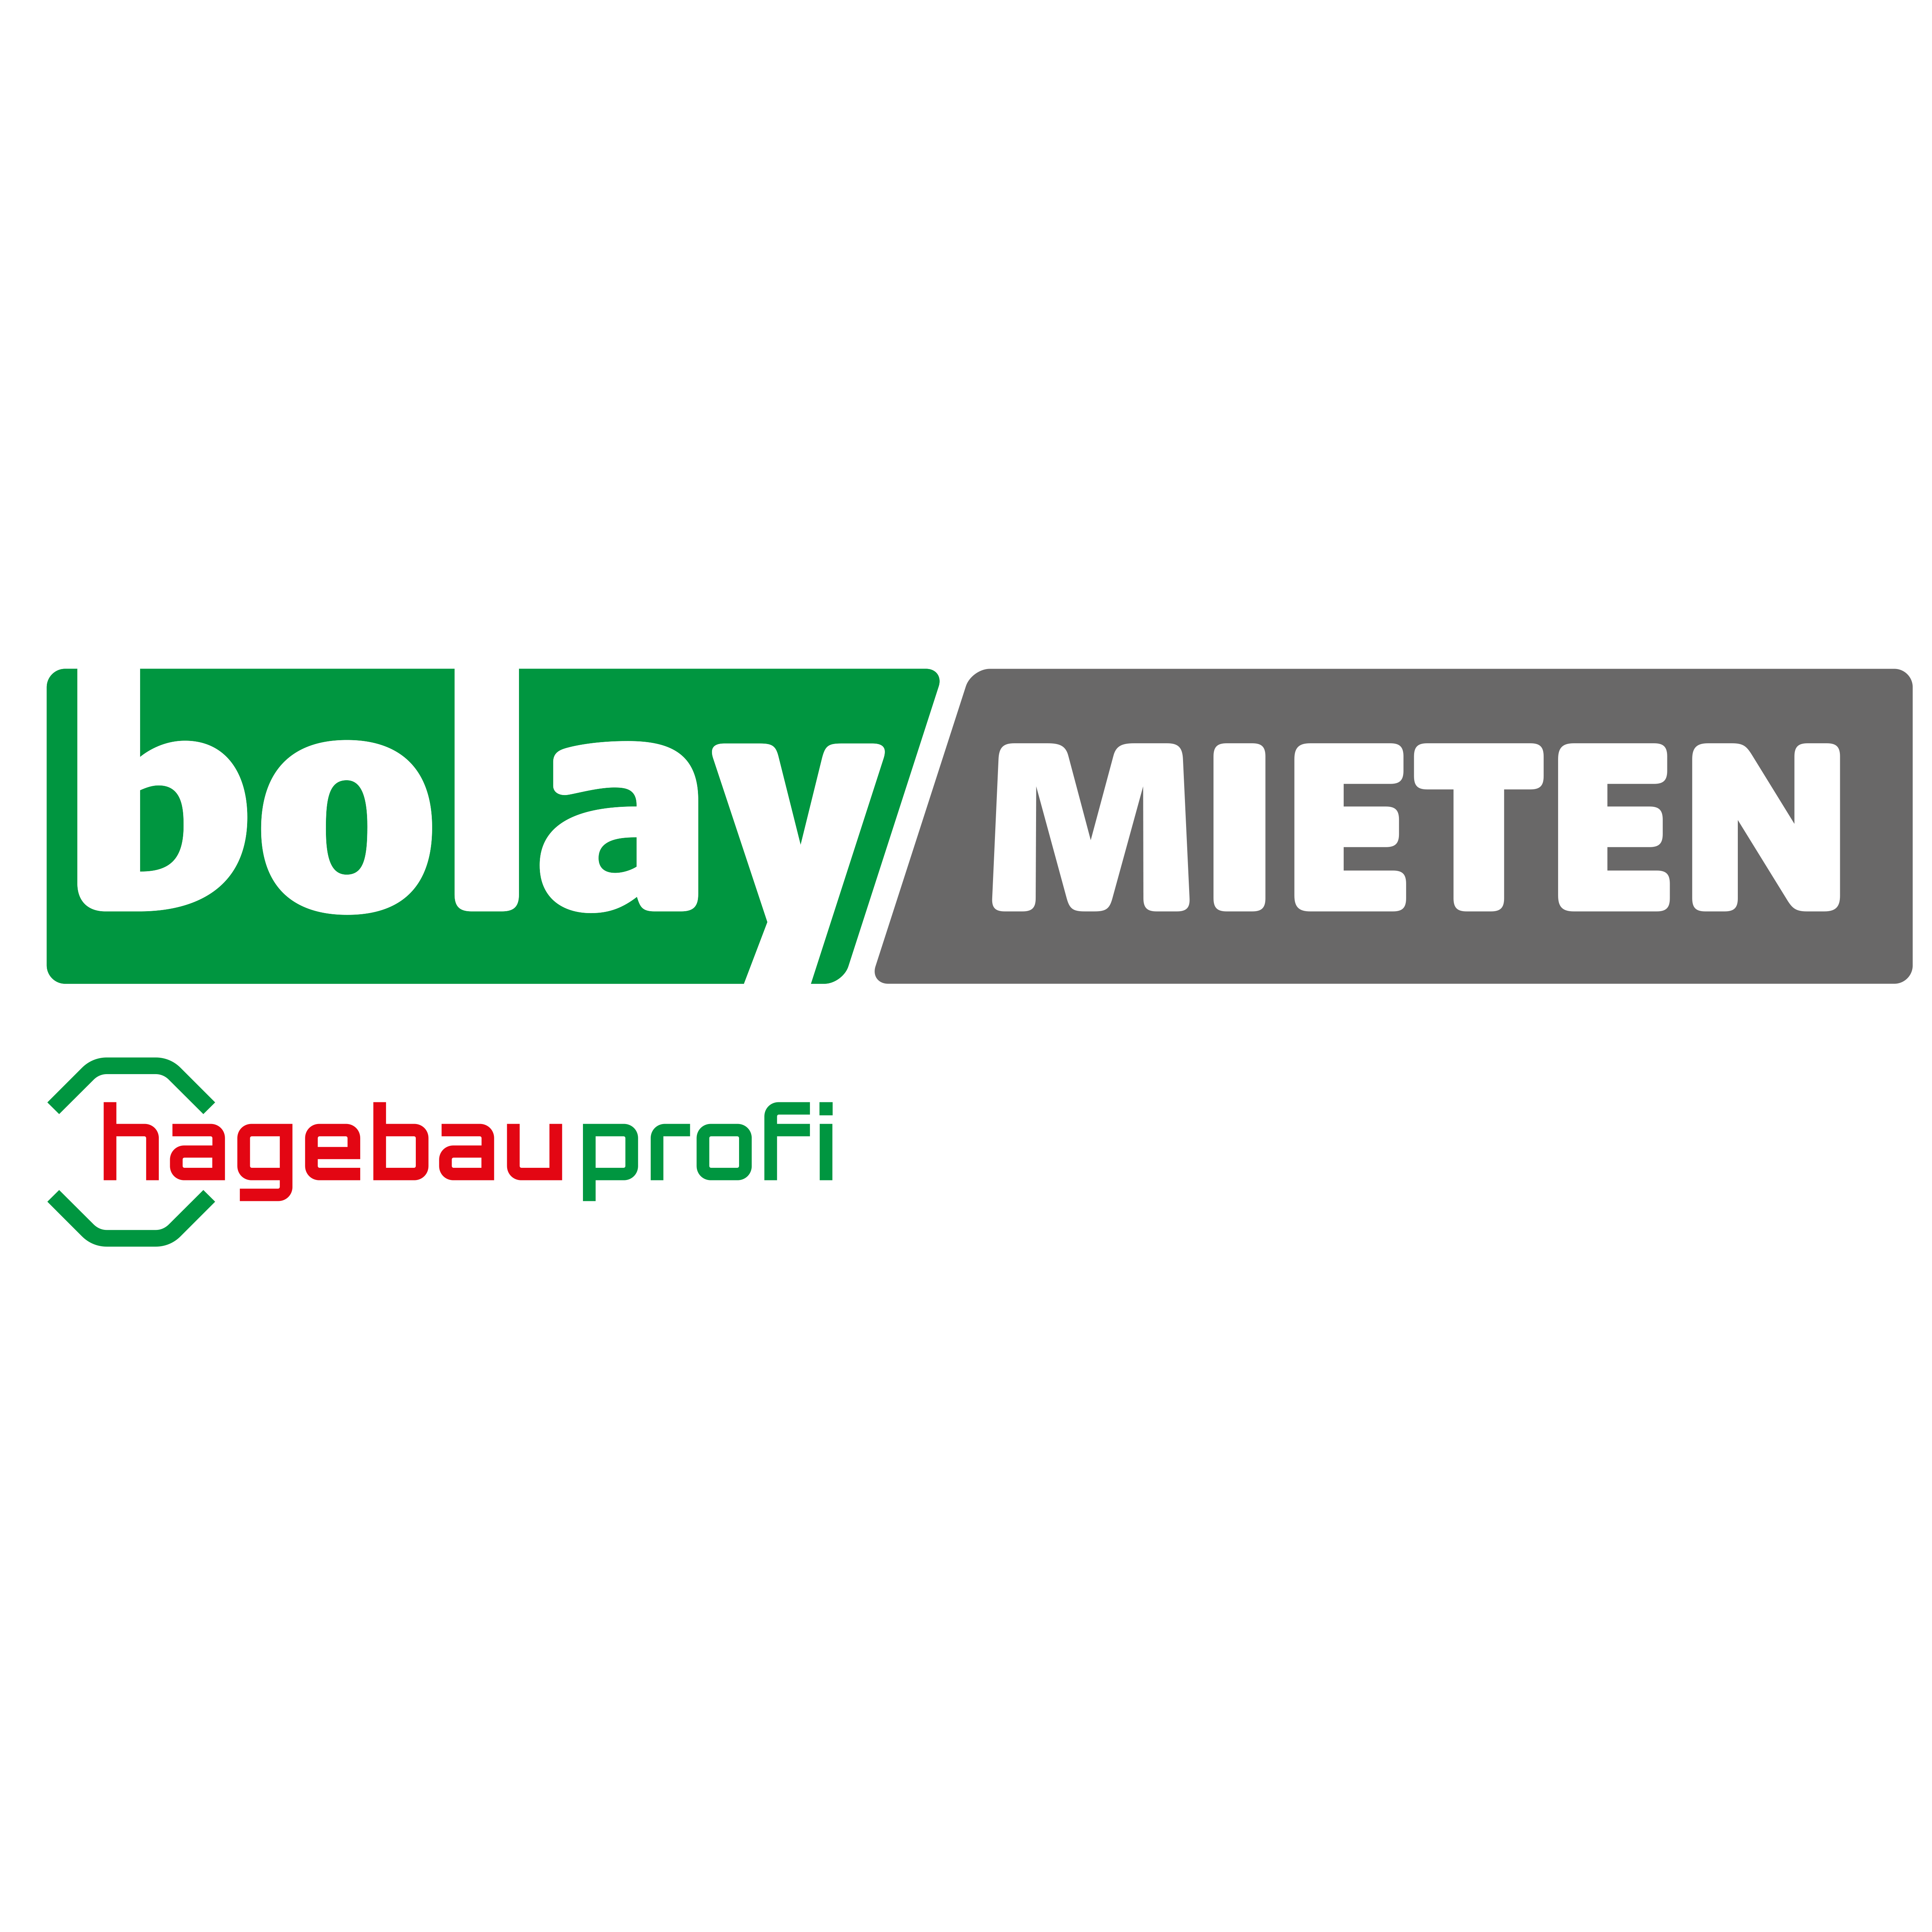 hagebau bolay / Mietpark Logo